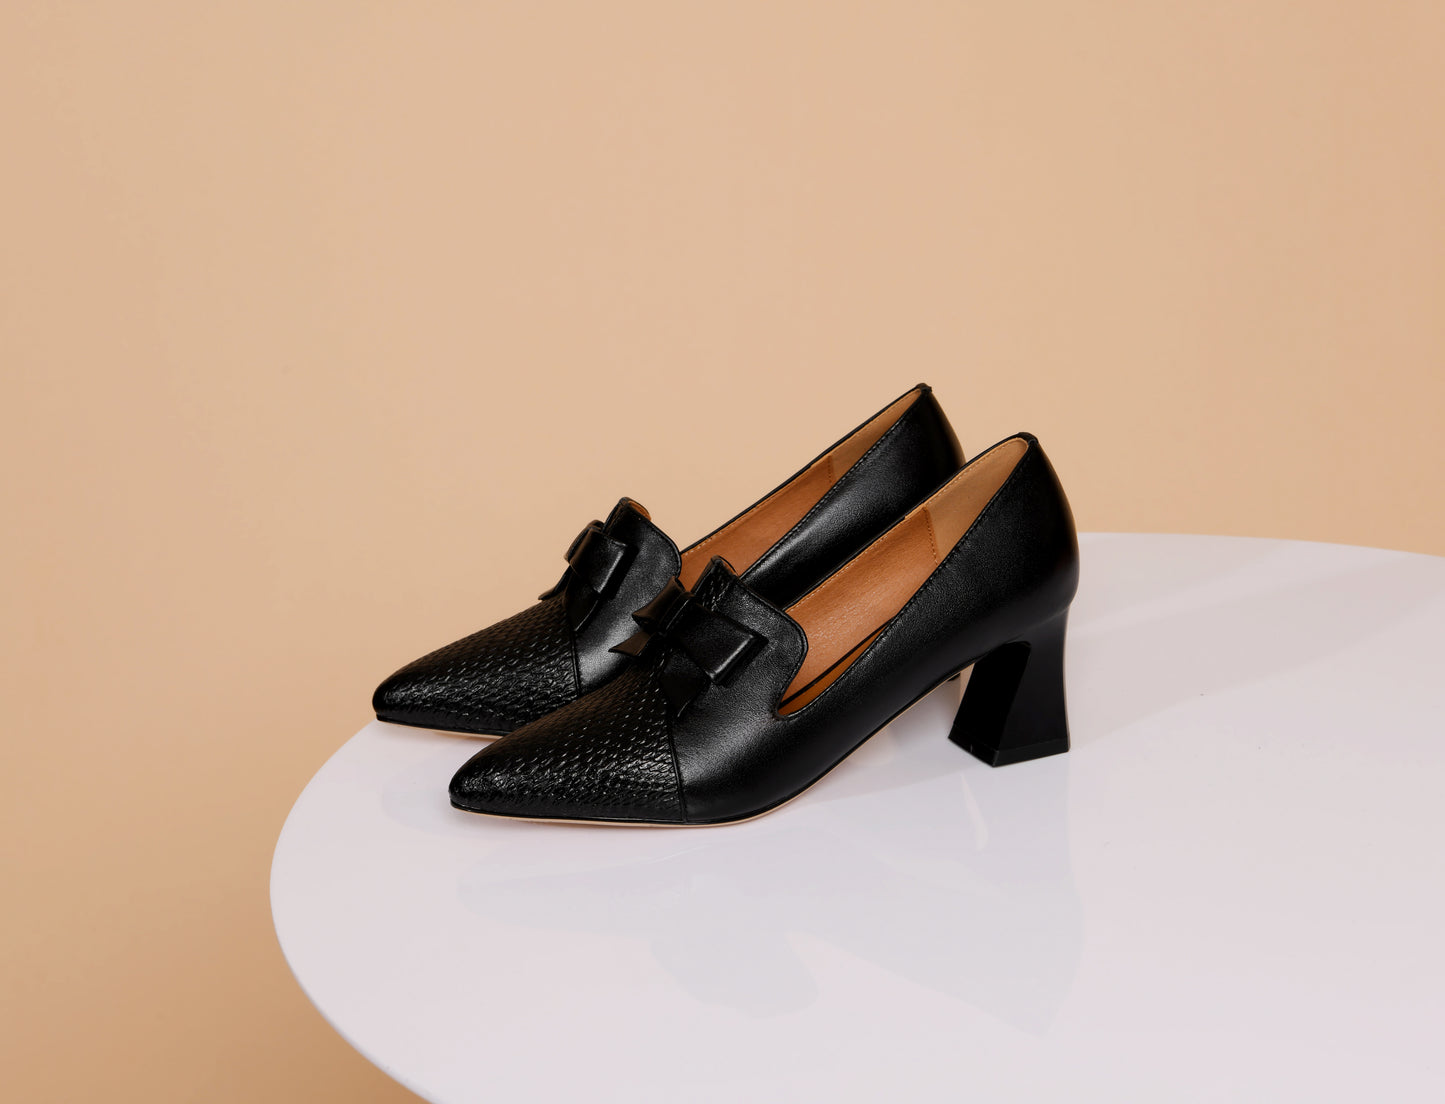 TinaCus Women's Handmade Genuine Leather Pointed Toe Bowknot Elegant Spool Heel Pumps Shoes